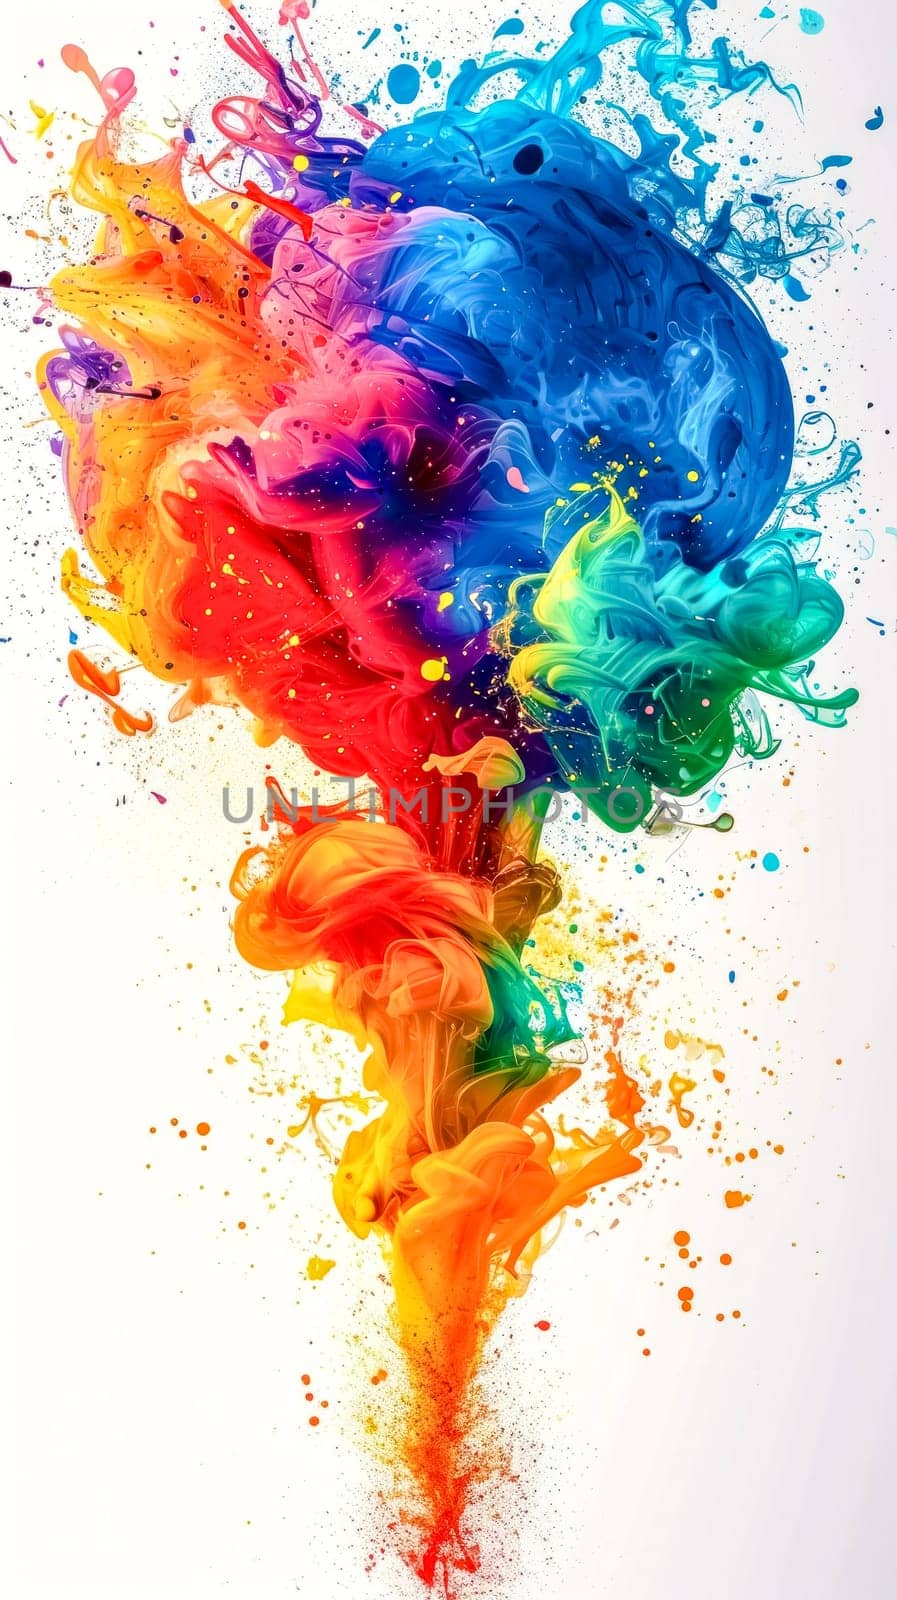 dynamic explosion of colorful ink splashes against a white background, symbolizing creativity and inspiration. by Edophoto